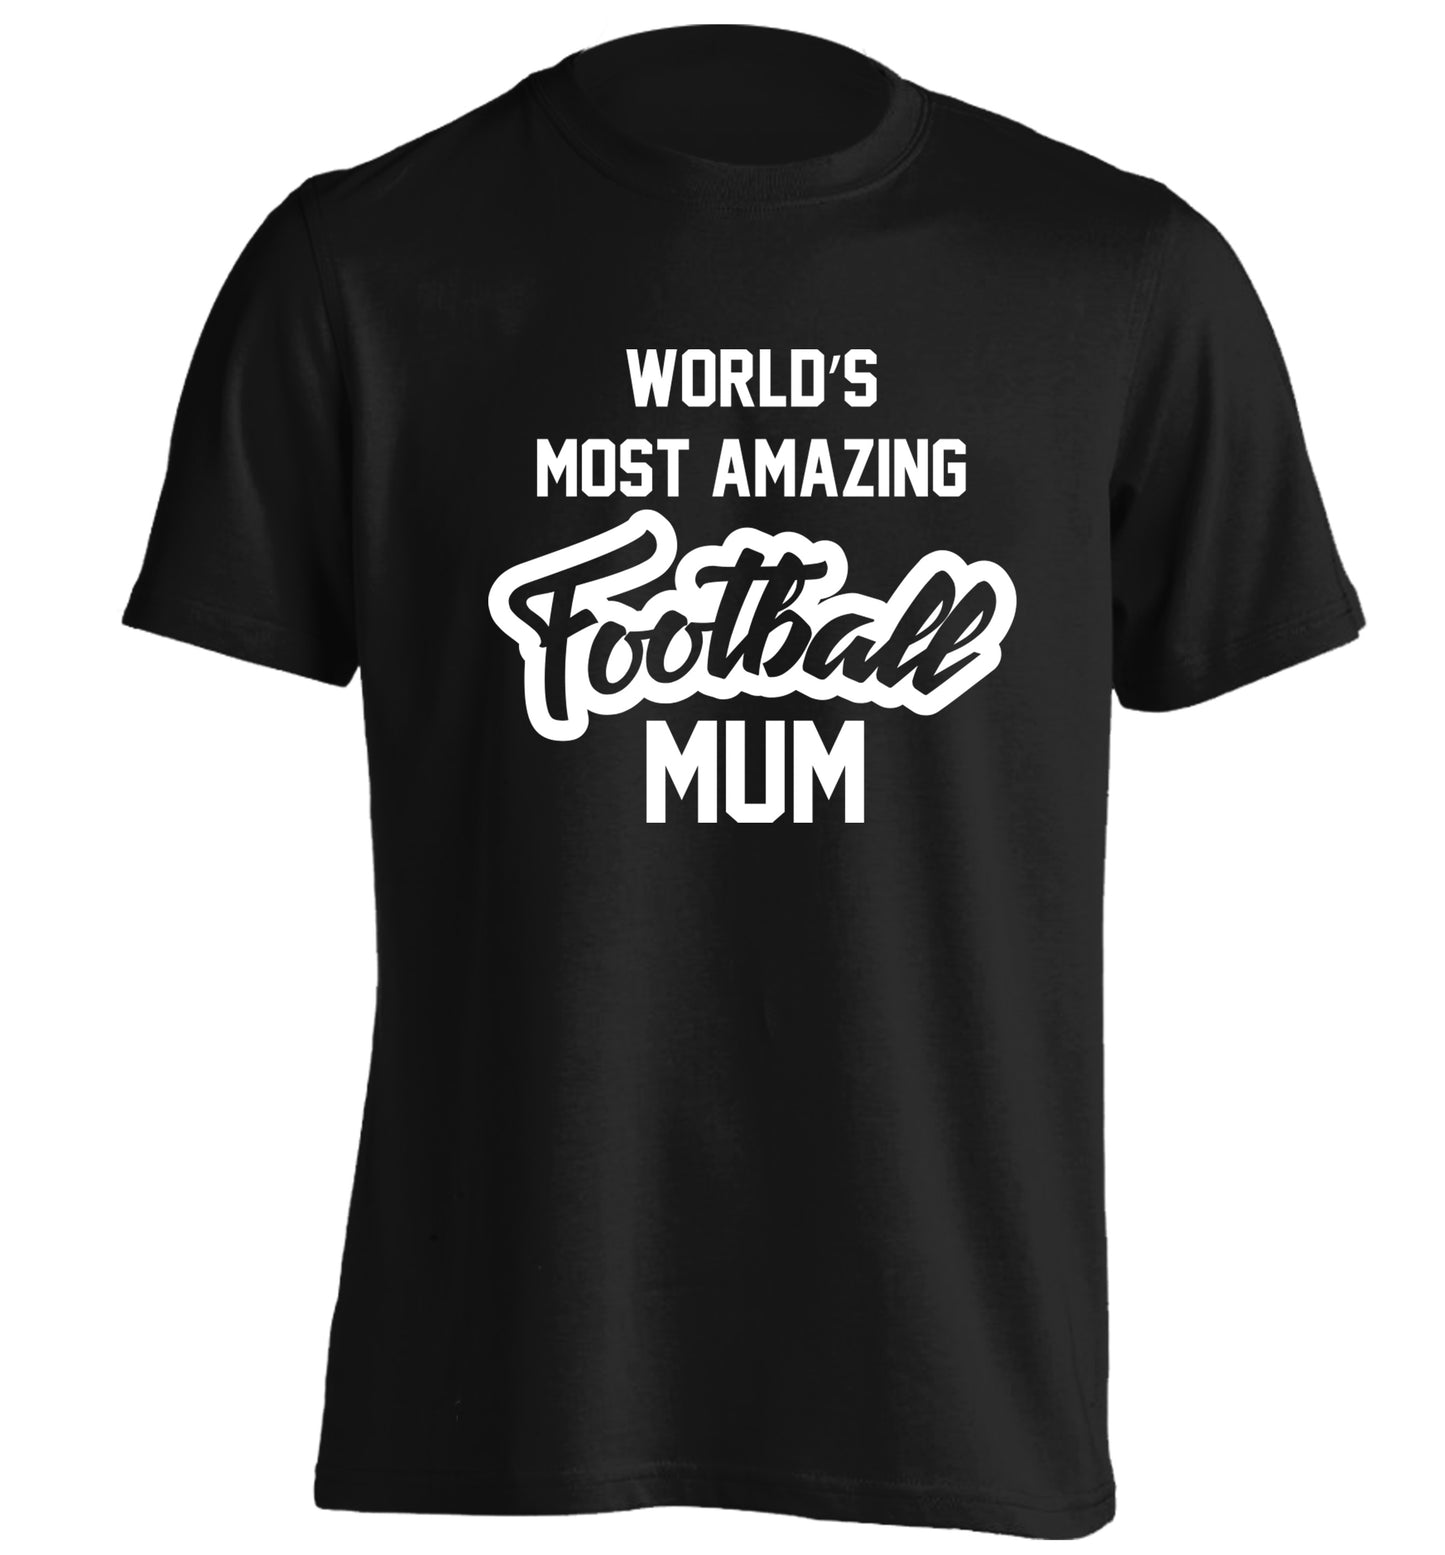 Worlds most amazing football mum adults unisexblack Tshirt 2XL